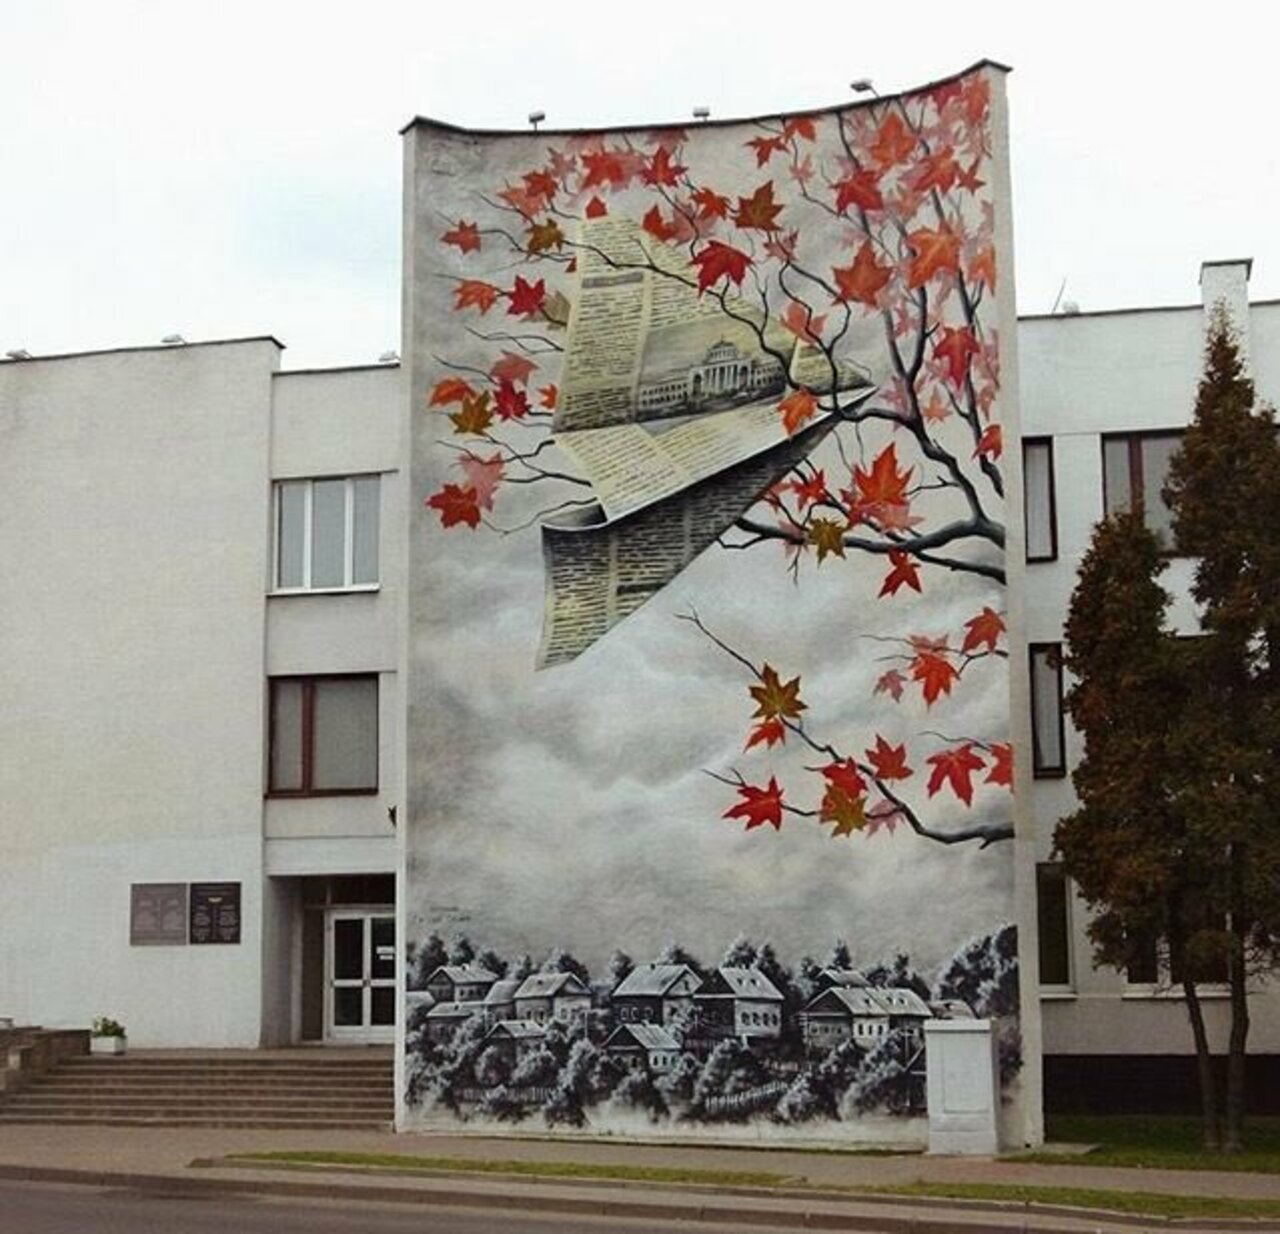 RT @GoogleStreetArt 

New Street Art by MUTUS in Belarus 

#art #graffiti #mural #streetart https://t.co/3qmKO54g7Q